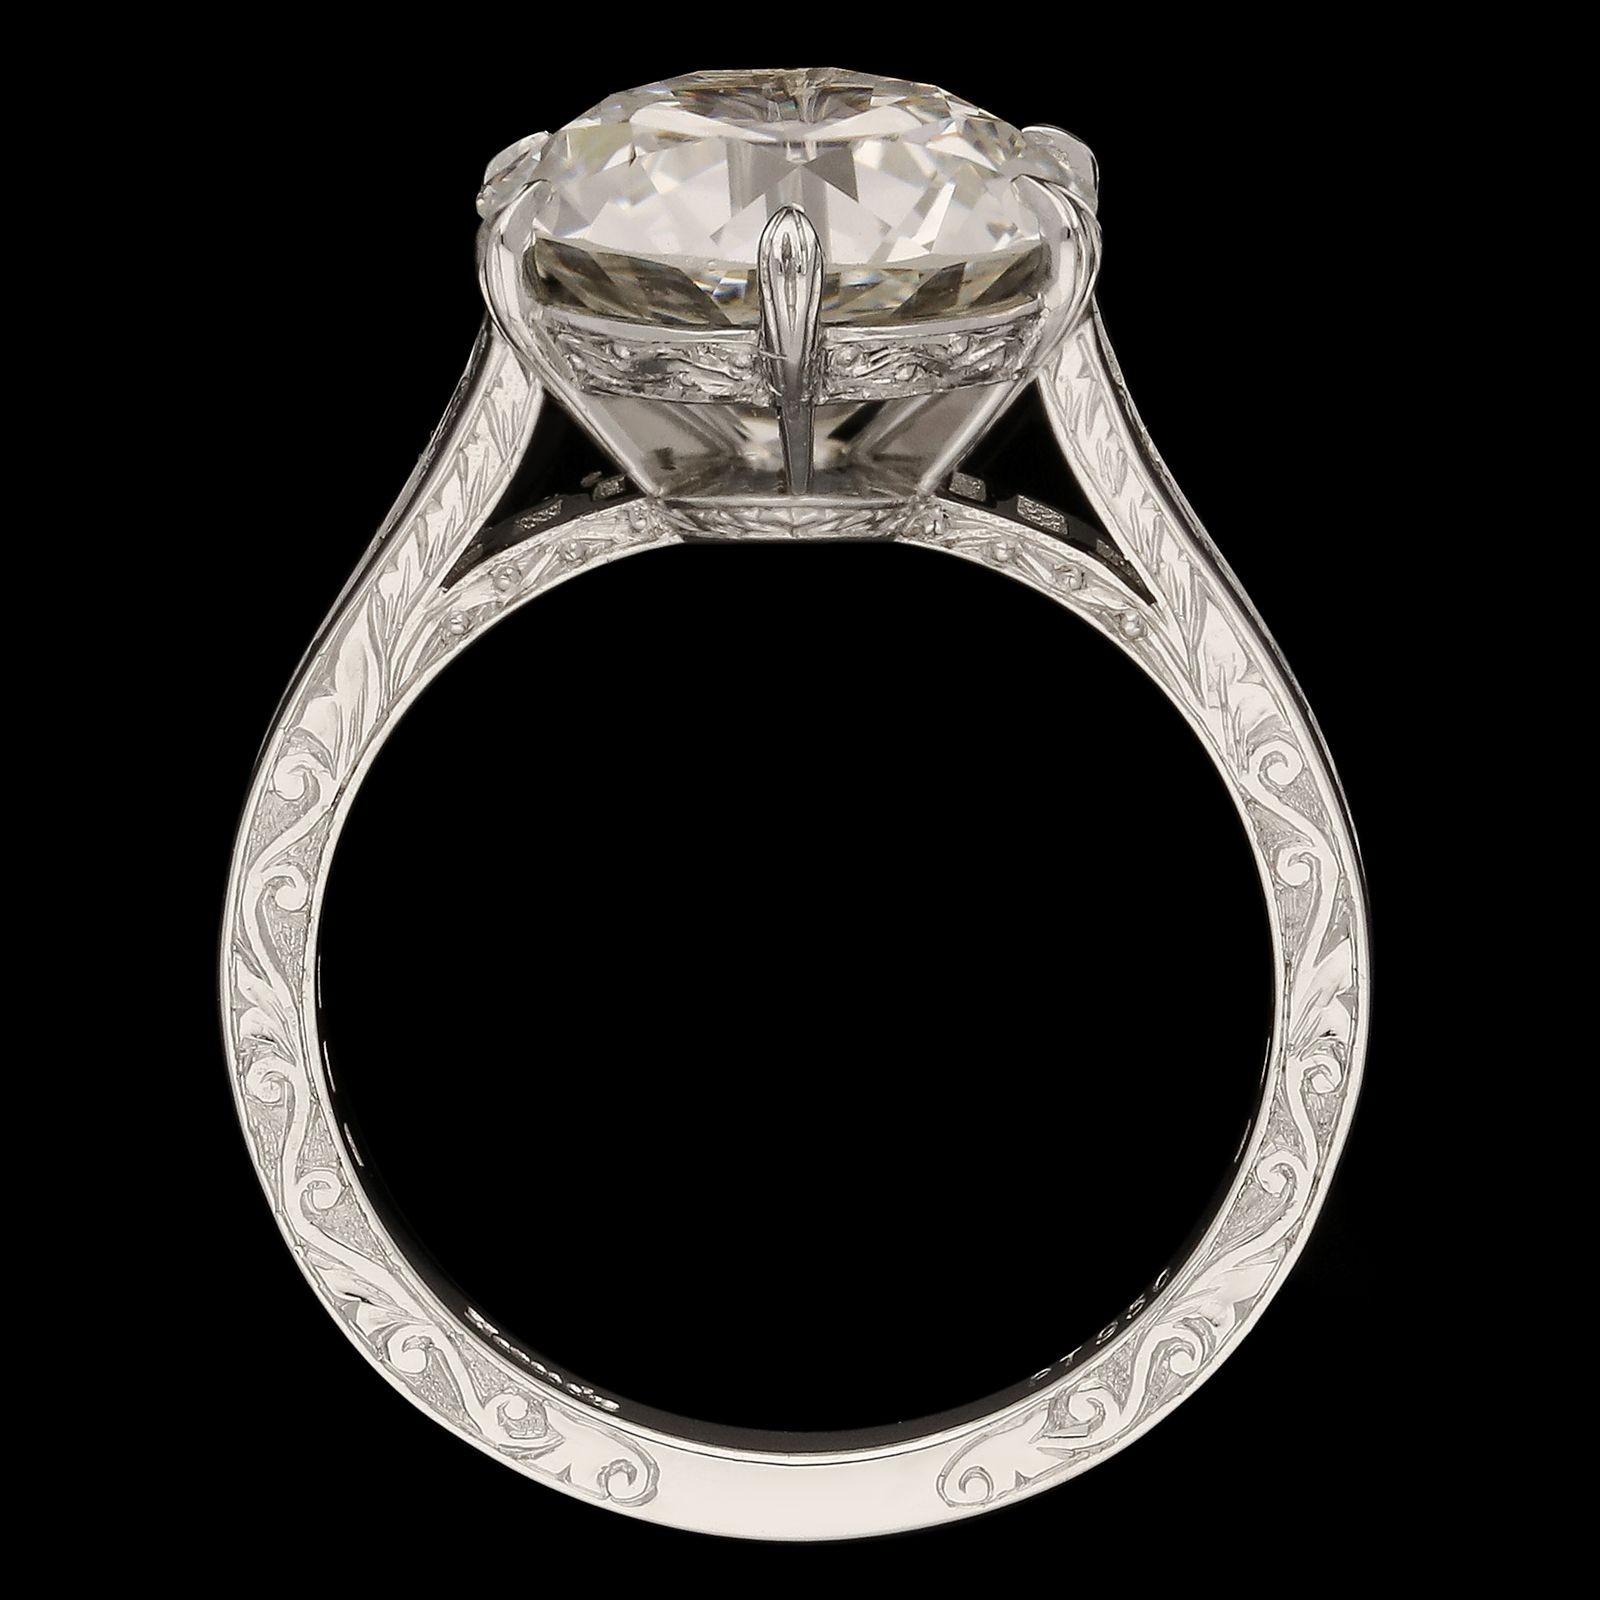 Hancocks 4.23ct Old European Brilliant Cut Diamond Ring in Platinum Contemporary For Sale 1